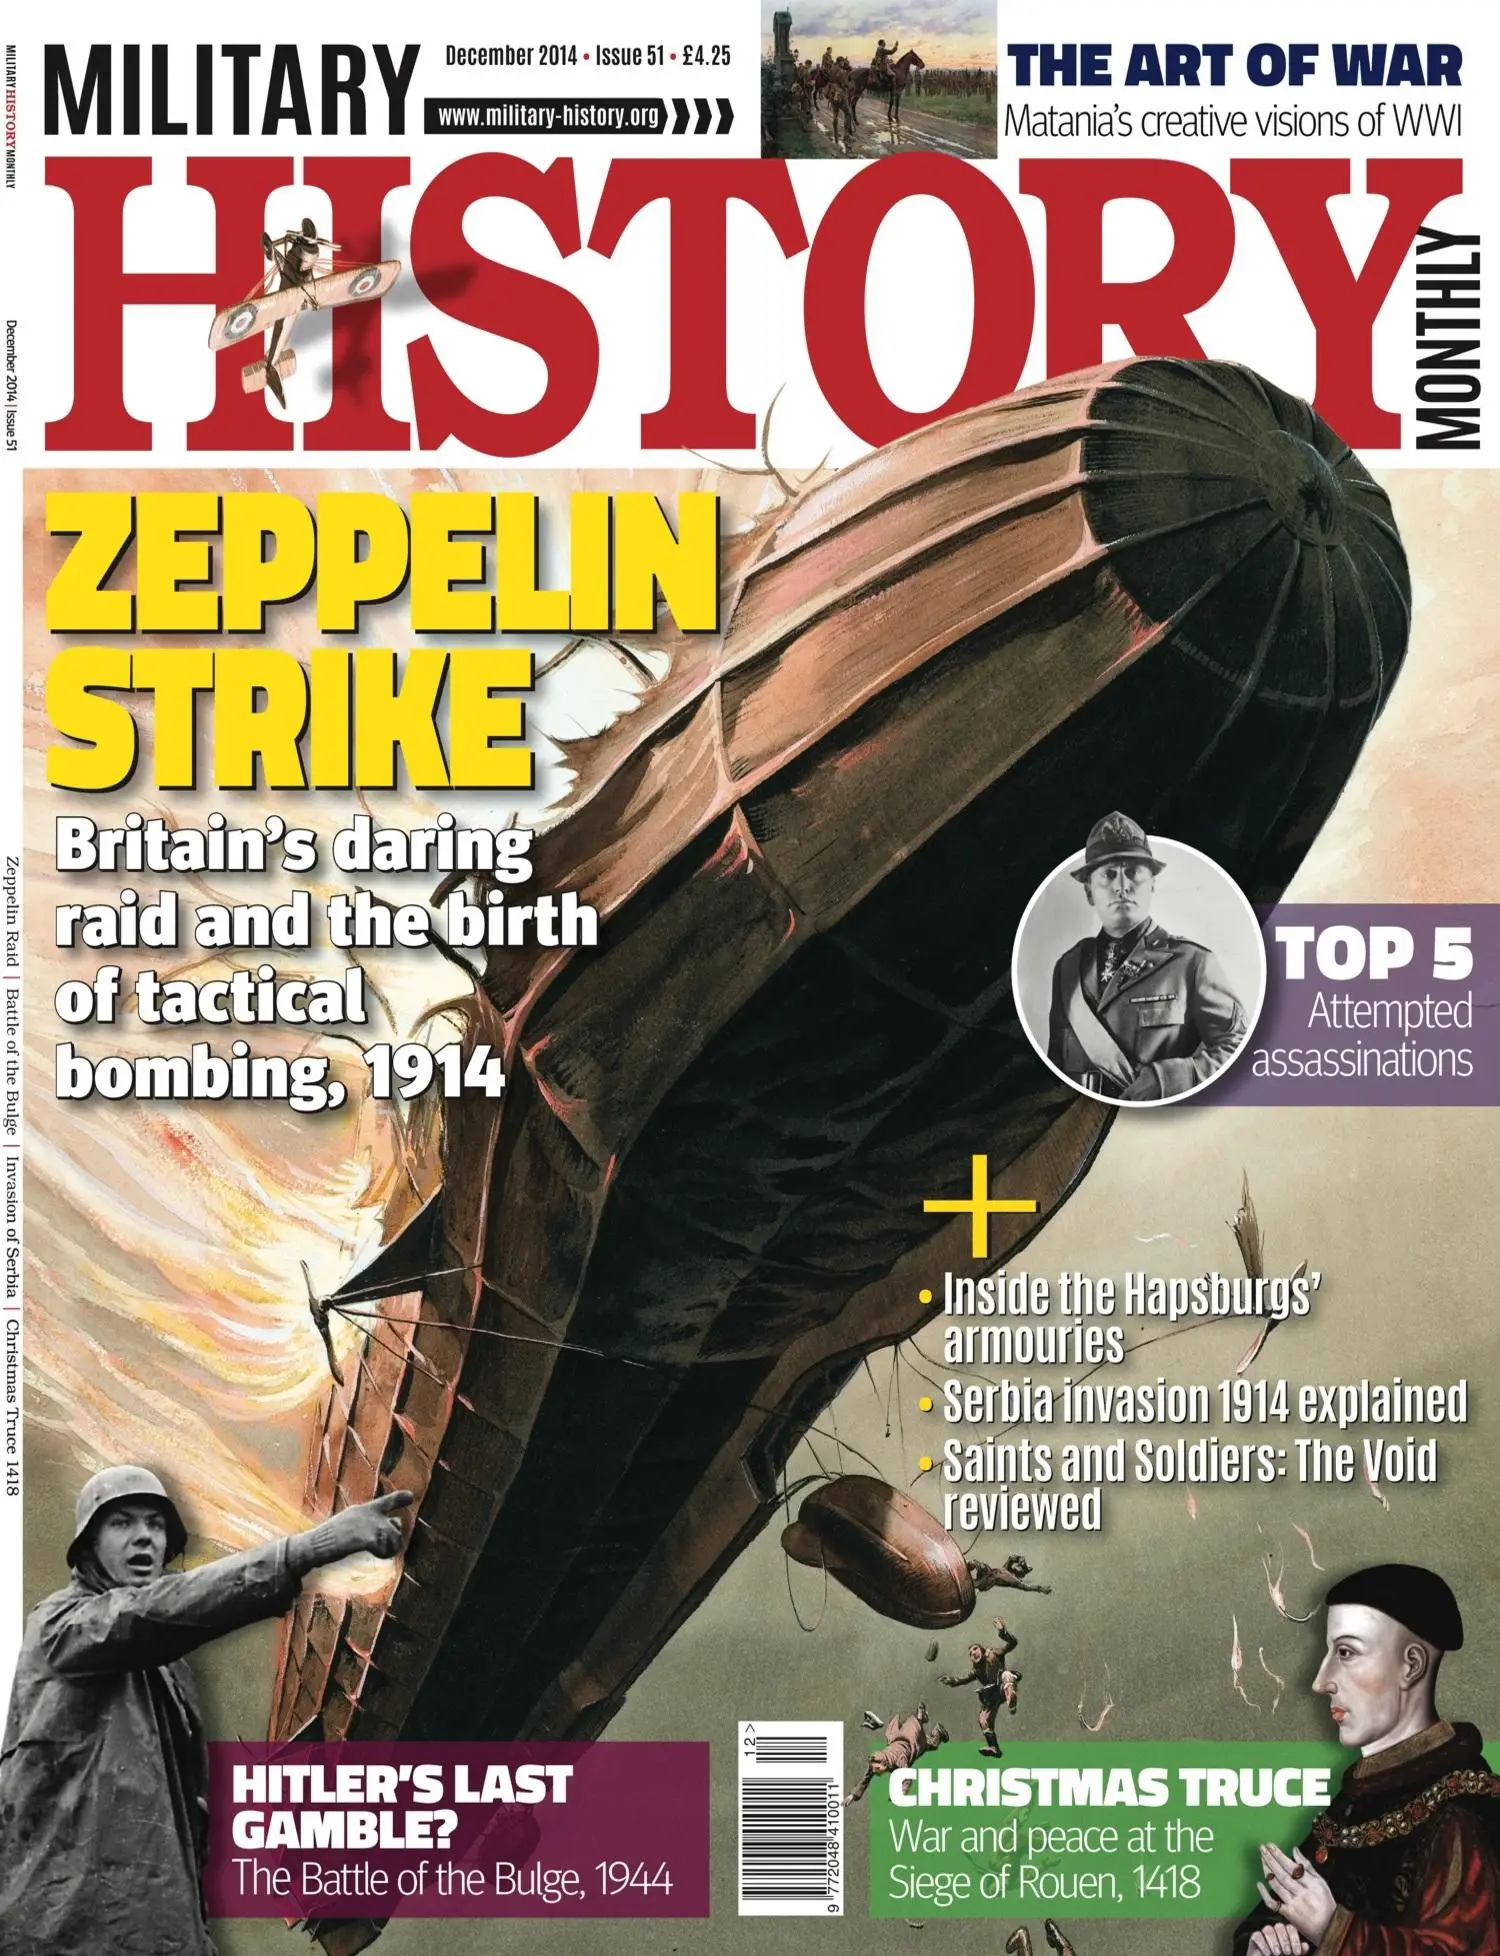 Matter issue. Журнал Military History обложка. History matters перевод. English History Magazines. Military Magazine.